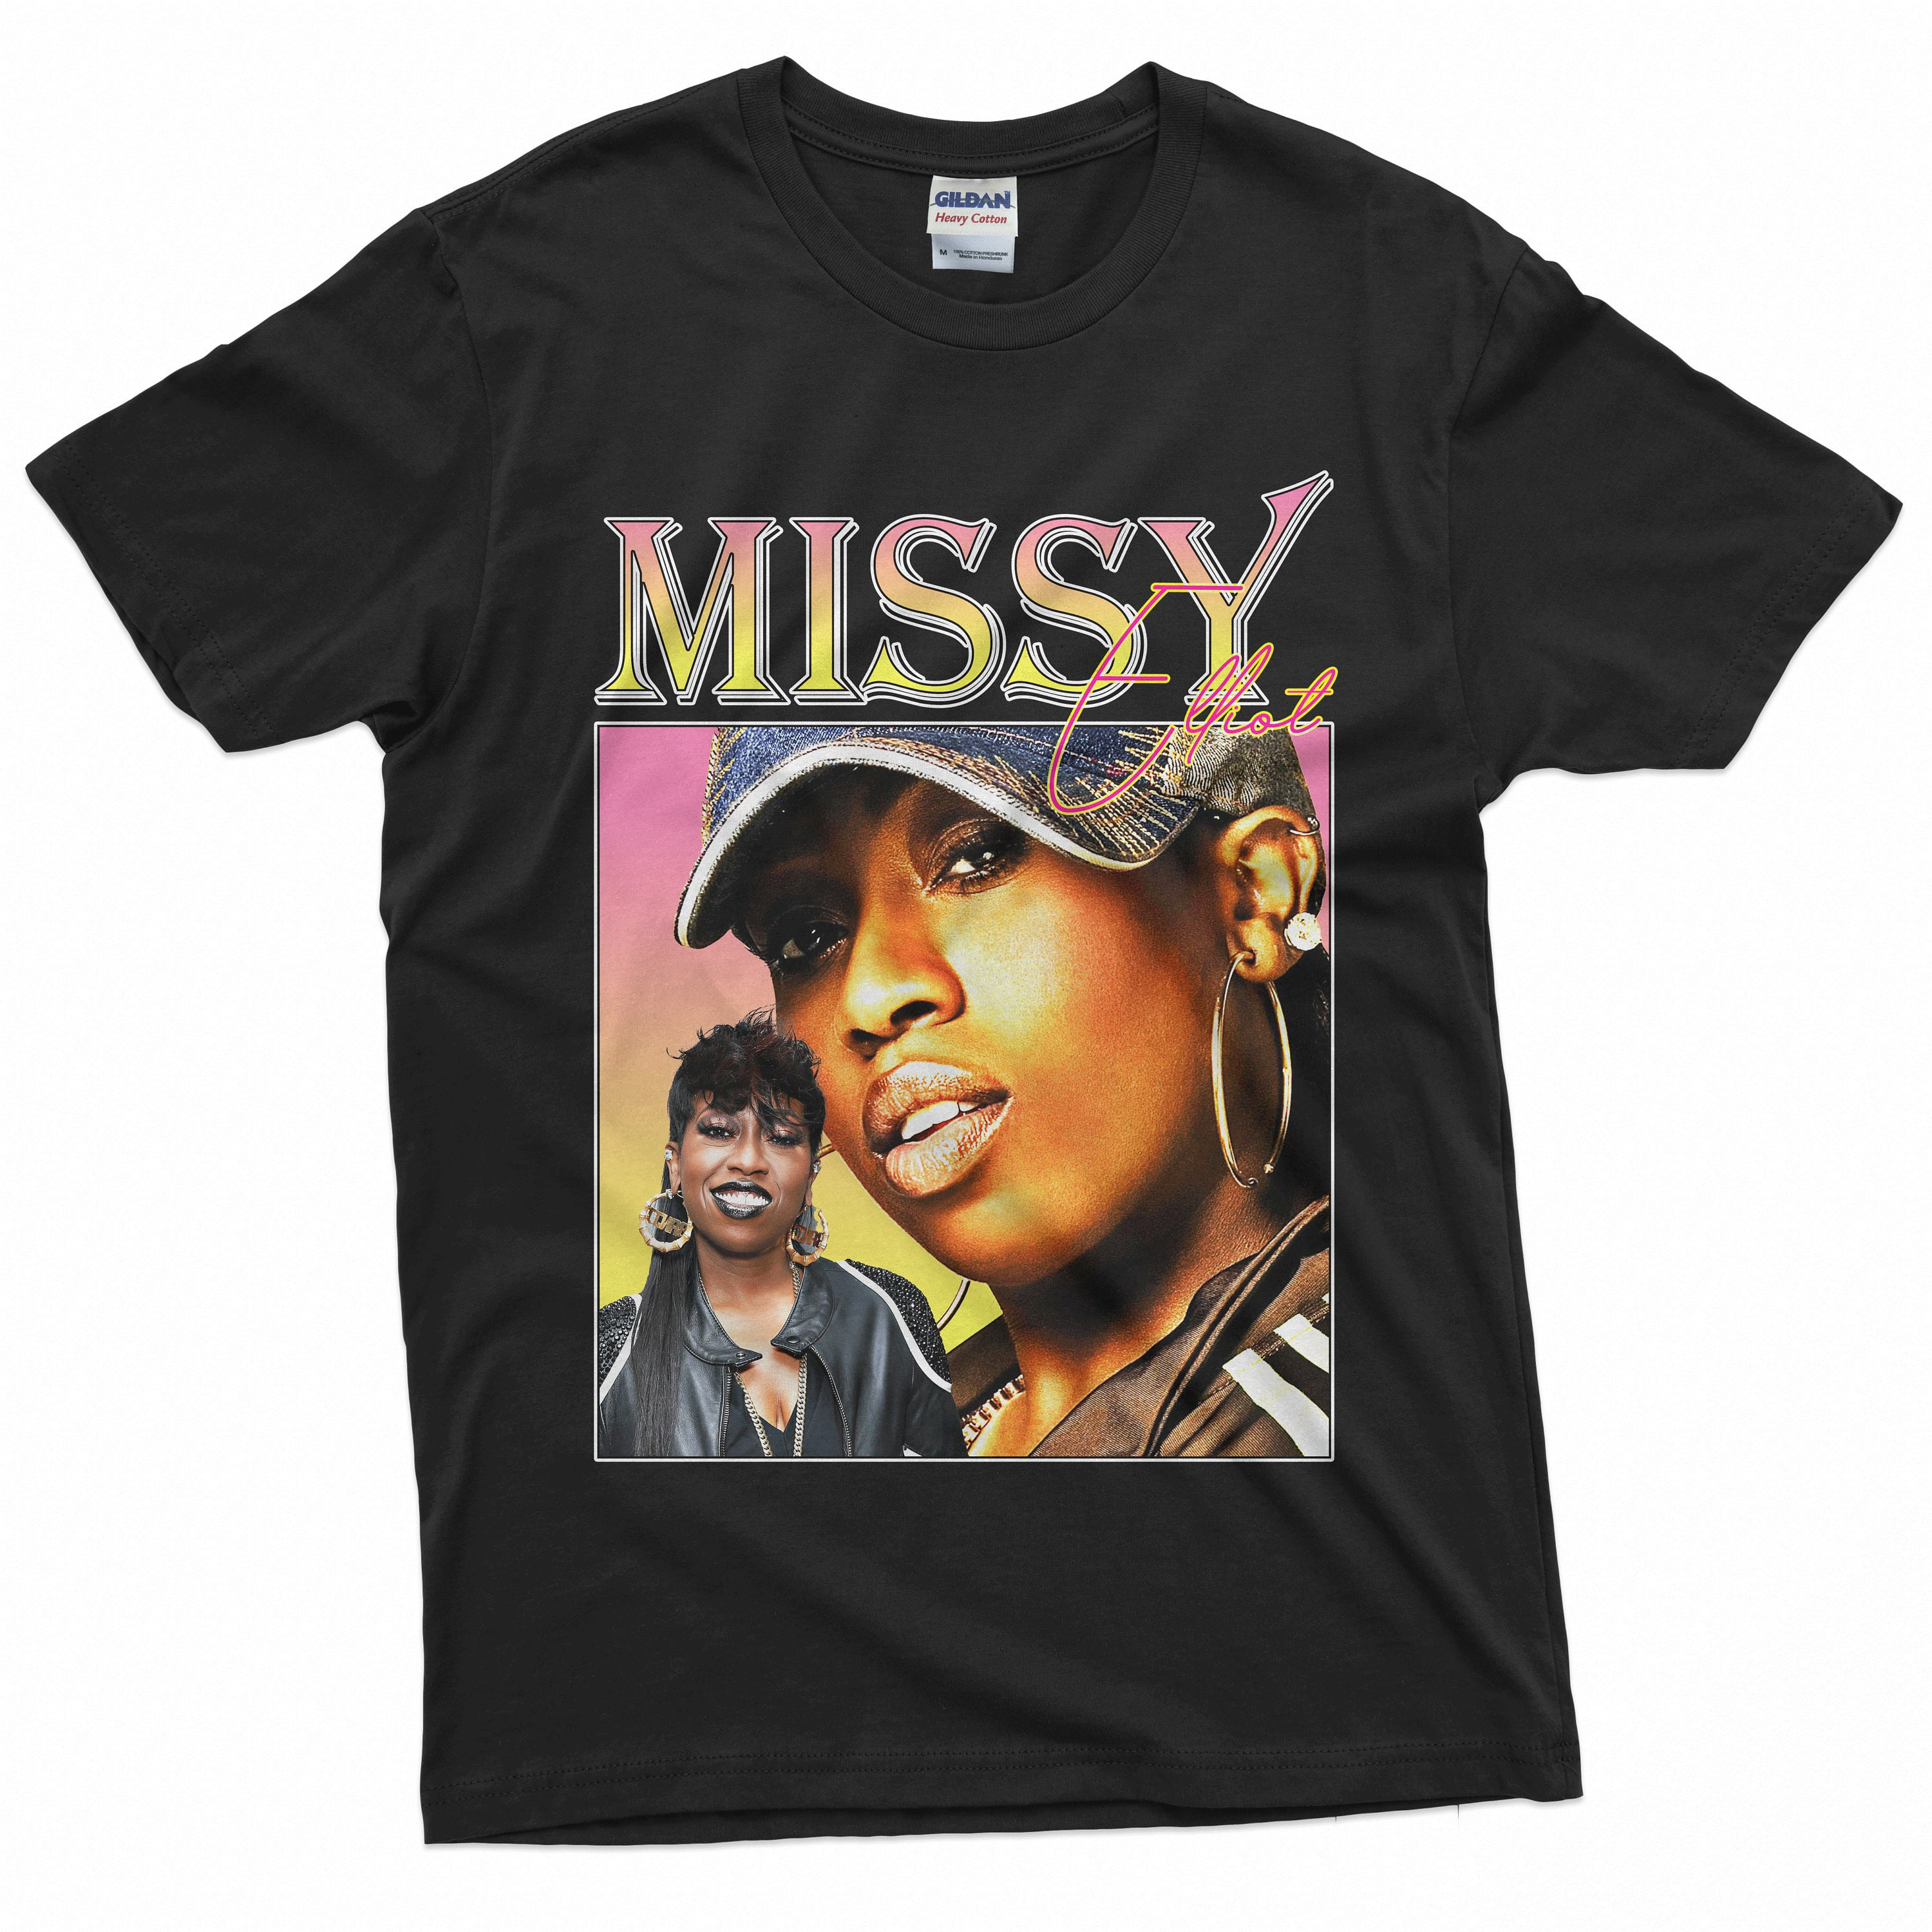 Missy Elliott Supa Dupa Fly Shirt, Rapper Shirt